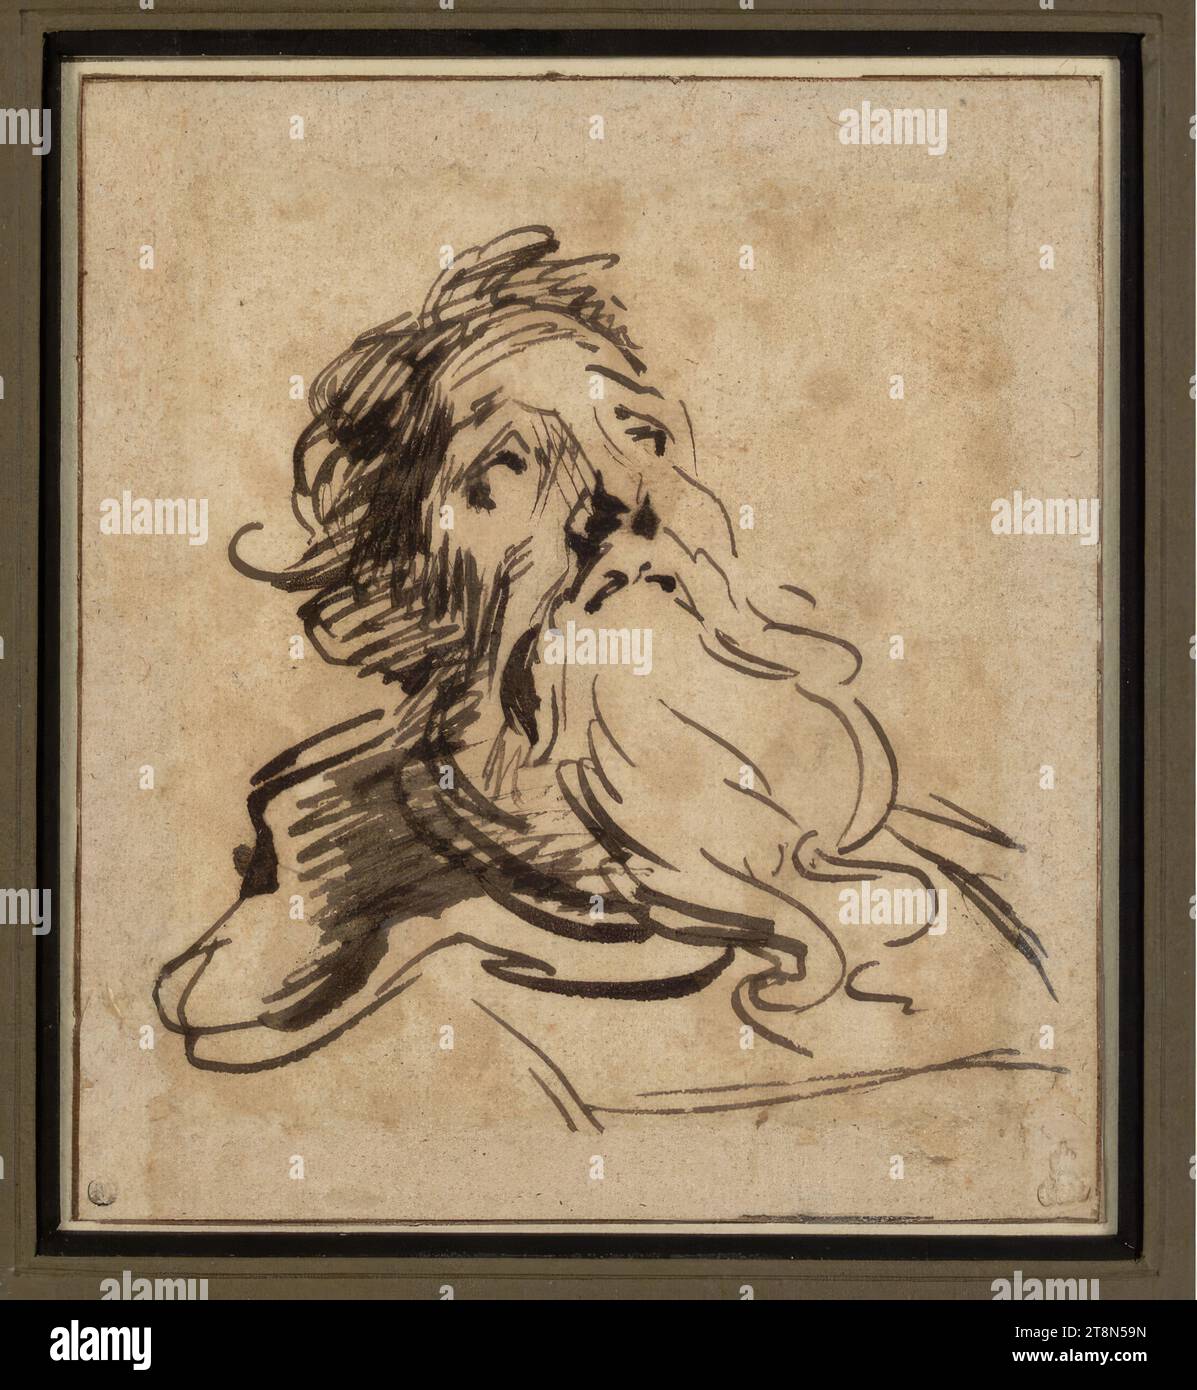 Cabeza masculina con una barba larga, ligeramente levantada y mirando a la derecha (San Agustín), Anthony van Dyck (Amberes 1599 - 1641 Londres-Blackfriars), dibujo, pluma marrón, 11 x 9,9 cm, l. l. Mariette; r. b. Duque Albert de Sajonia-Teschen Foto de stock